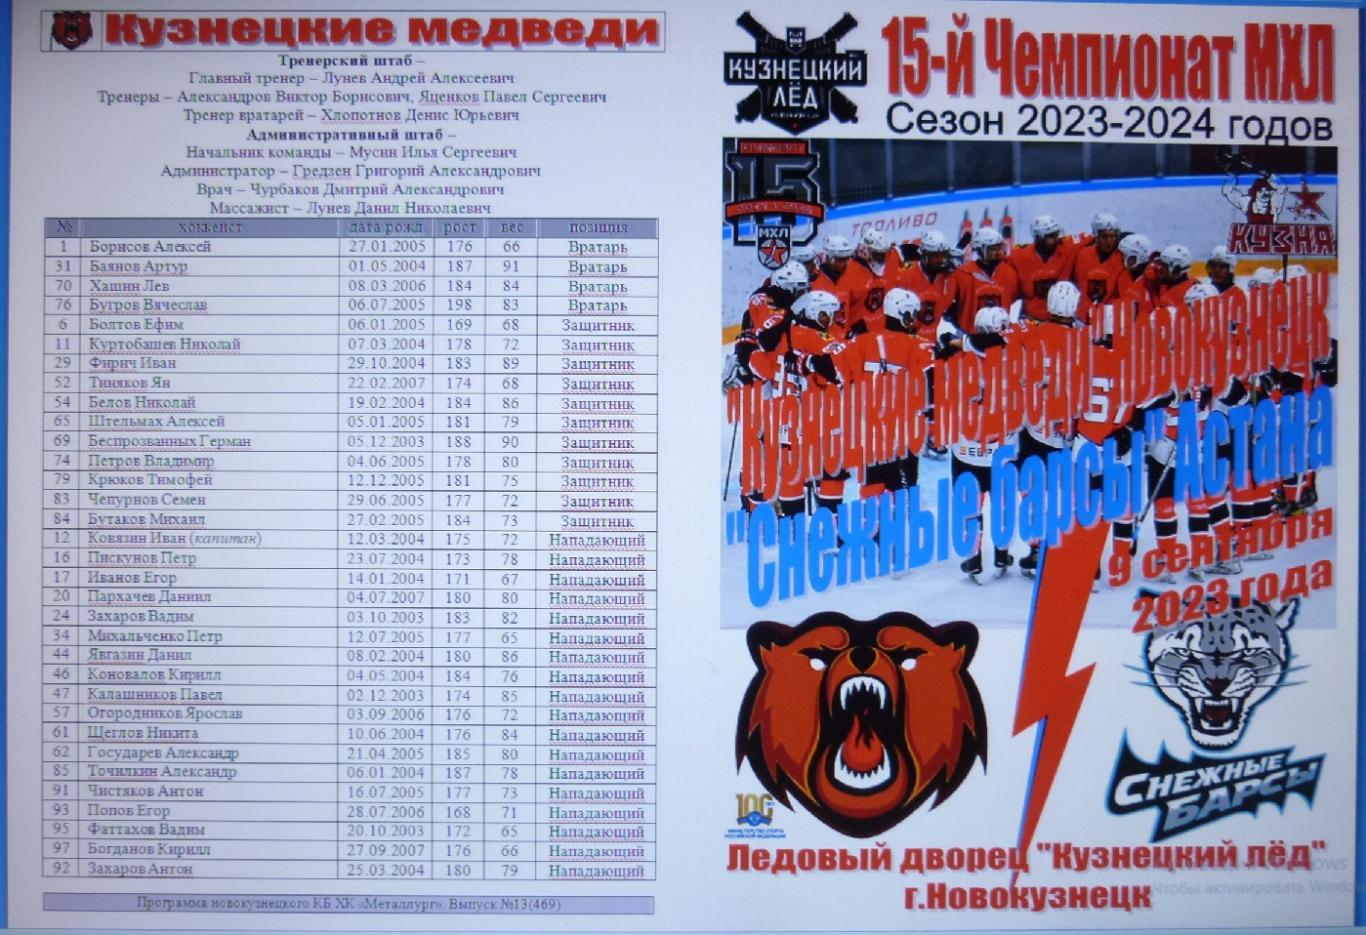 Кузнецкие медведи(Новокузнецк) - Снежные барсы(Астана) - 2023/24 - 2